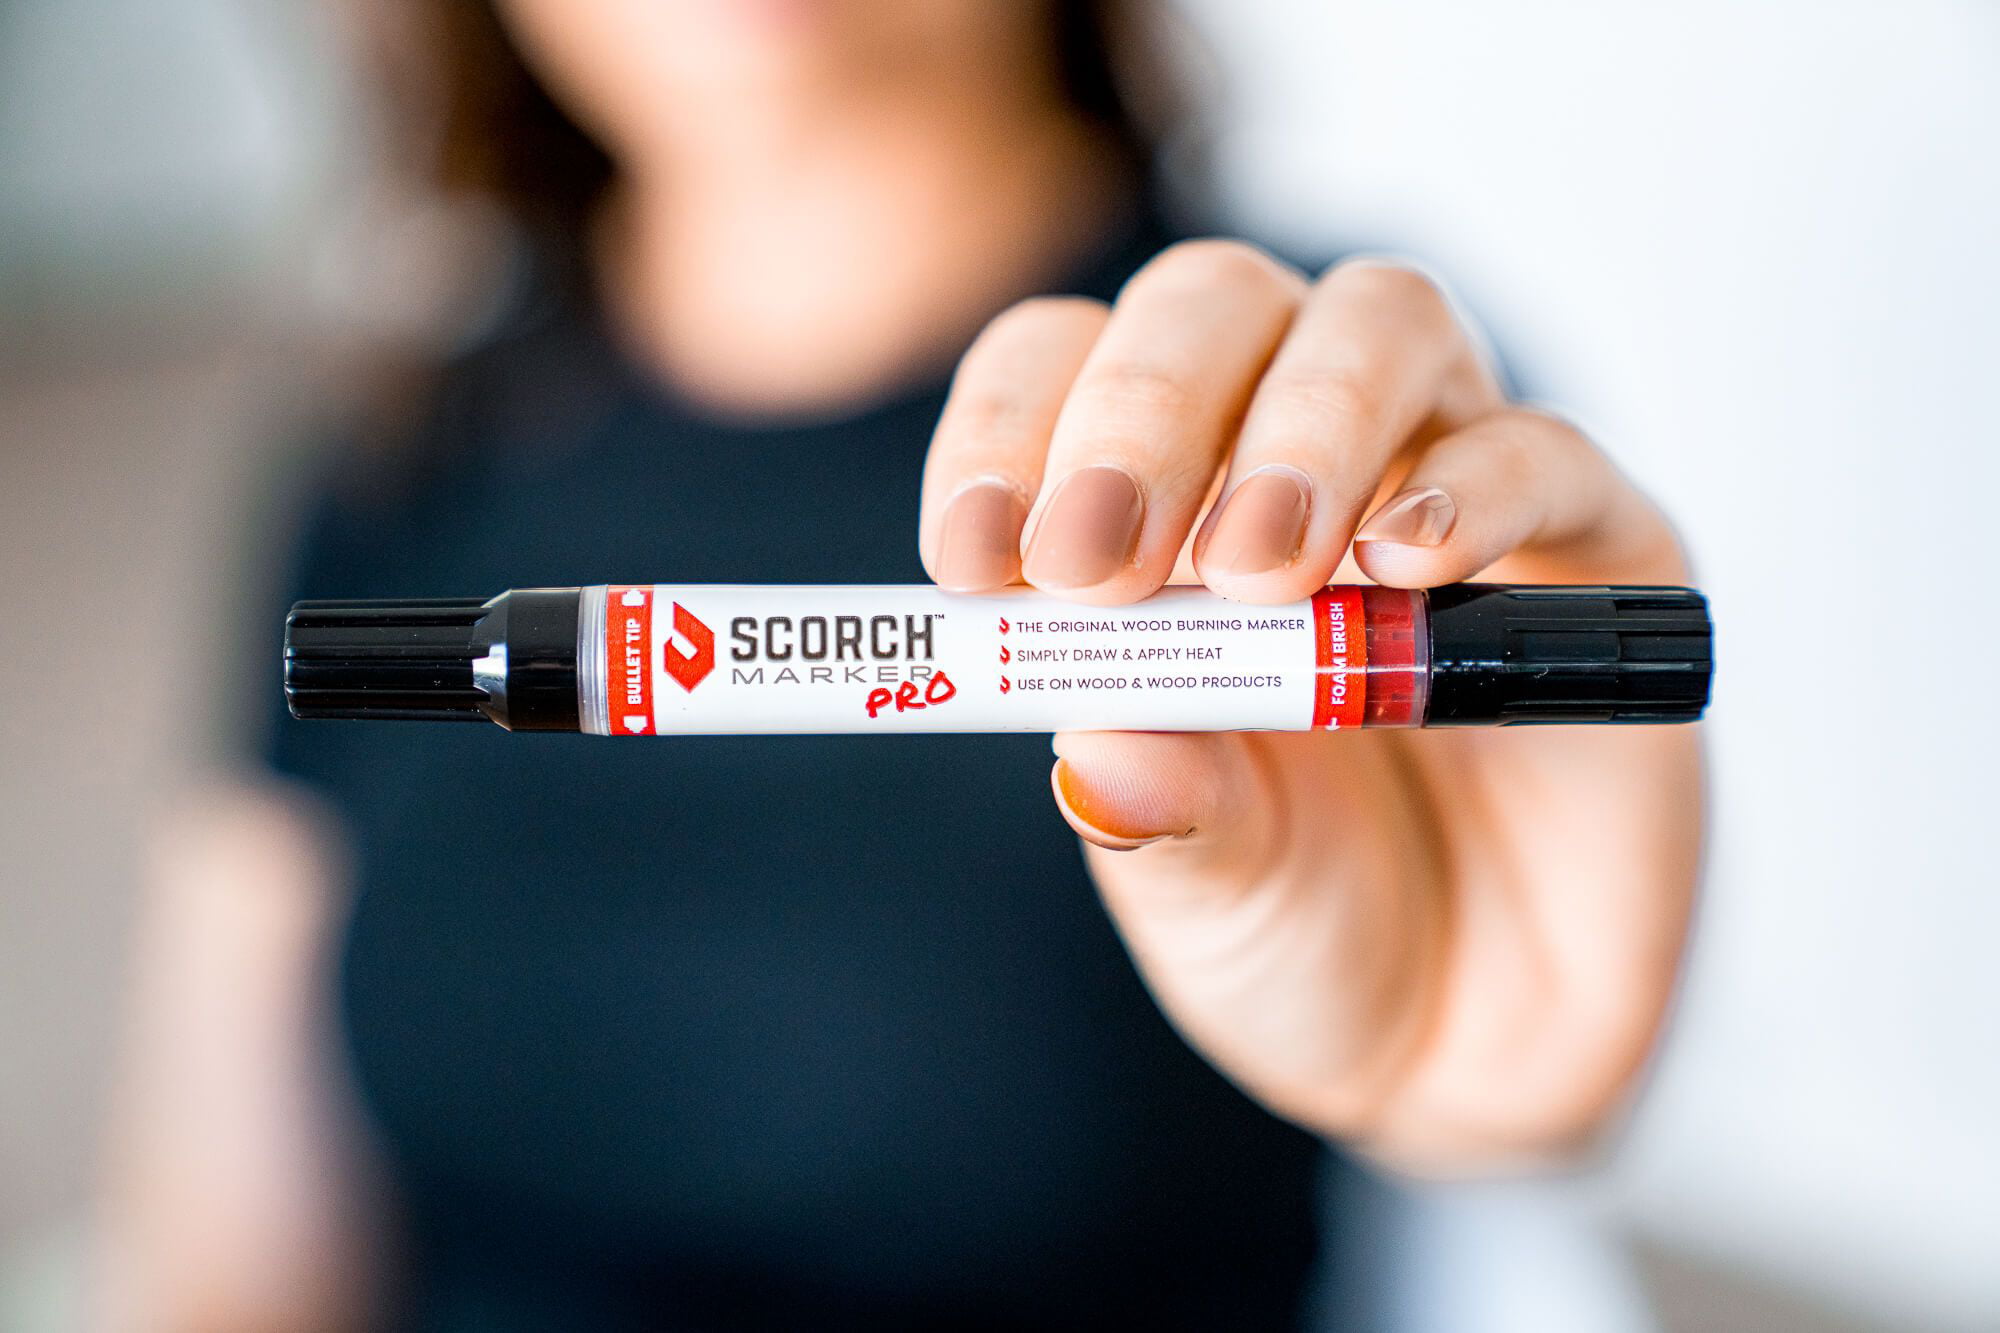 Scorch Marker Pro Woodburning Pen - Turners Retreat